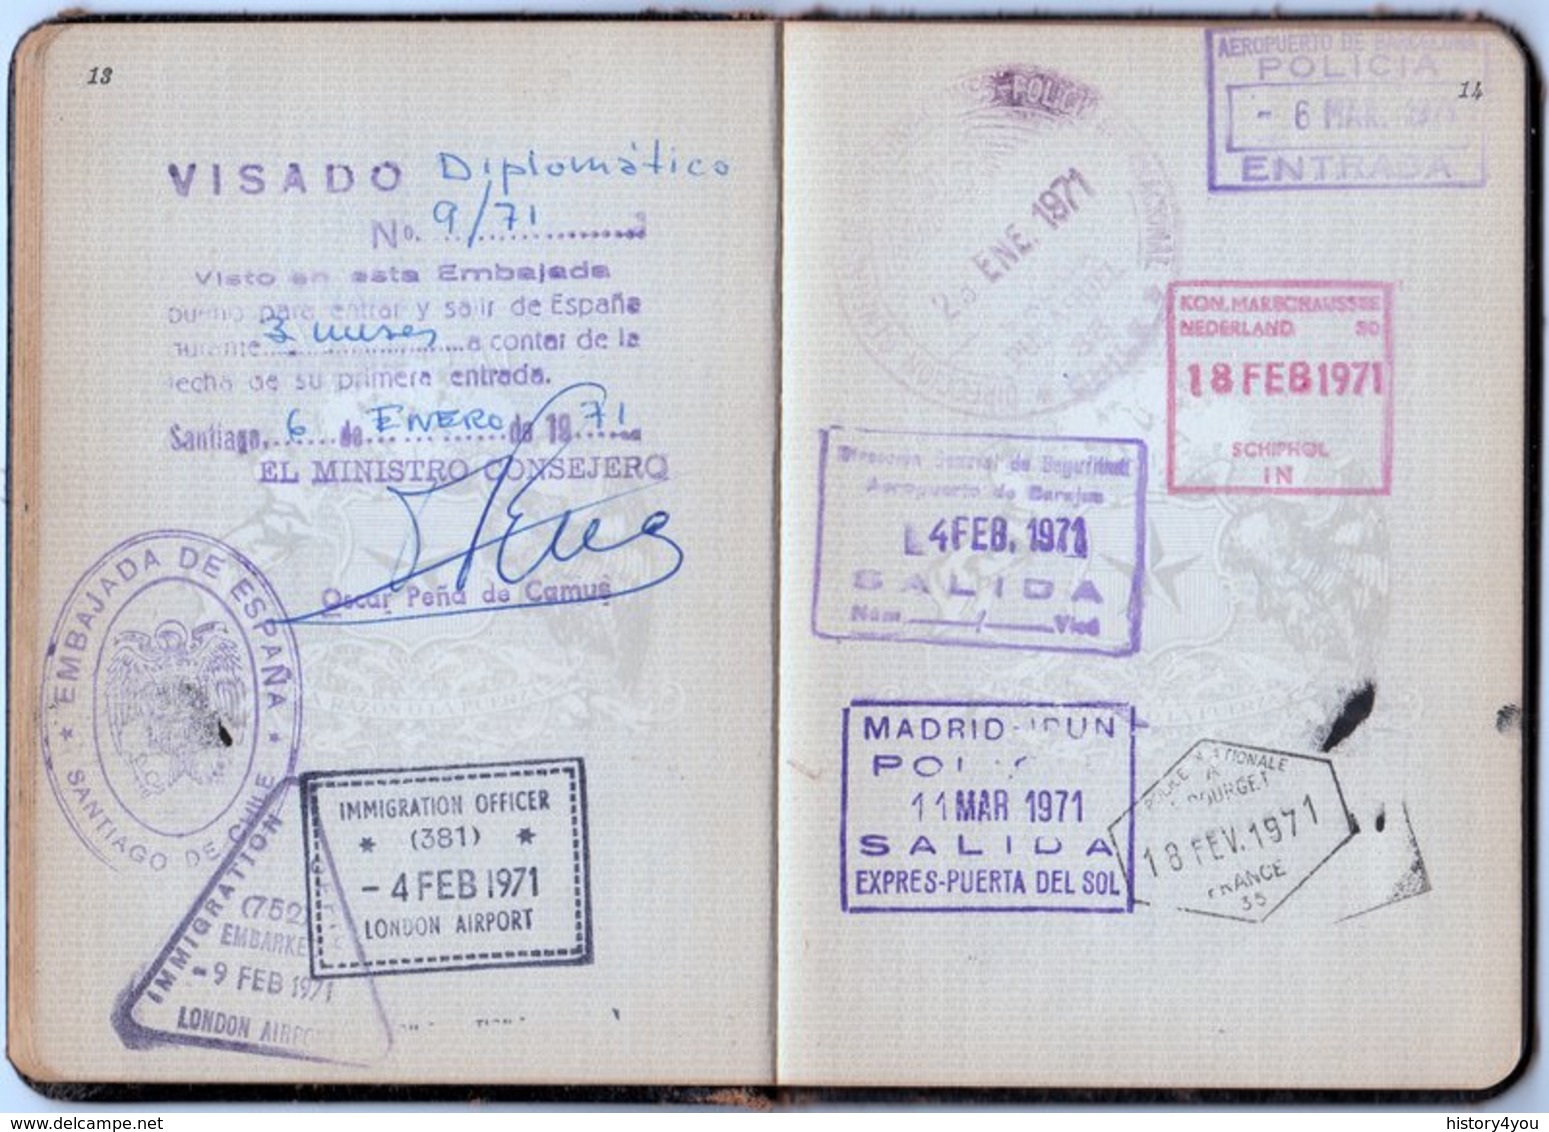 CHILE DIPLOMATIC Passport 1967 with visas DAUGHTER OF SENATOR